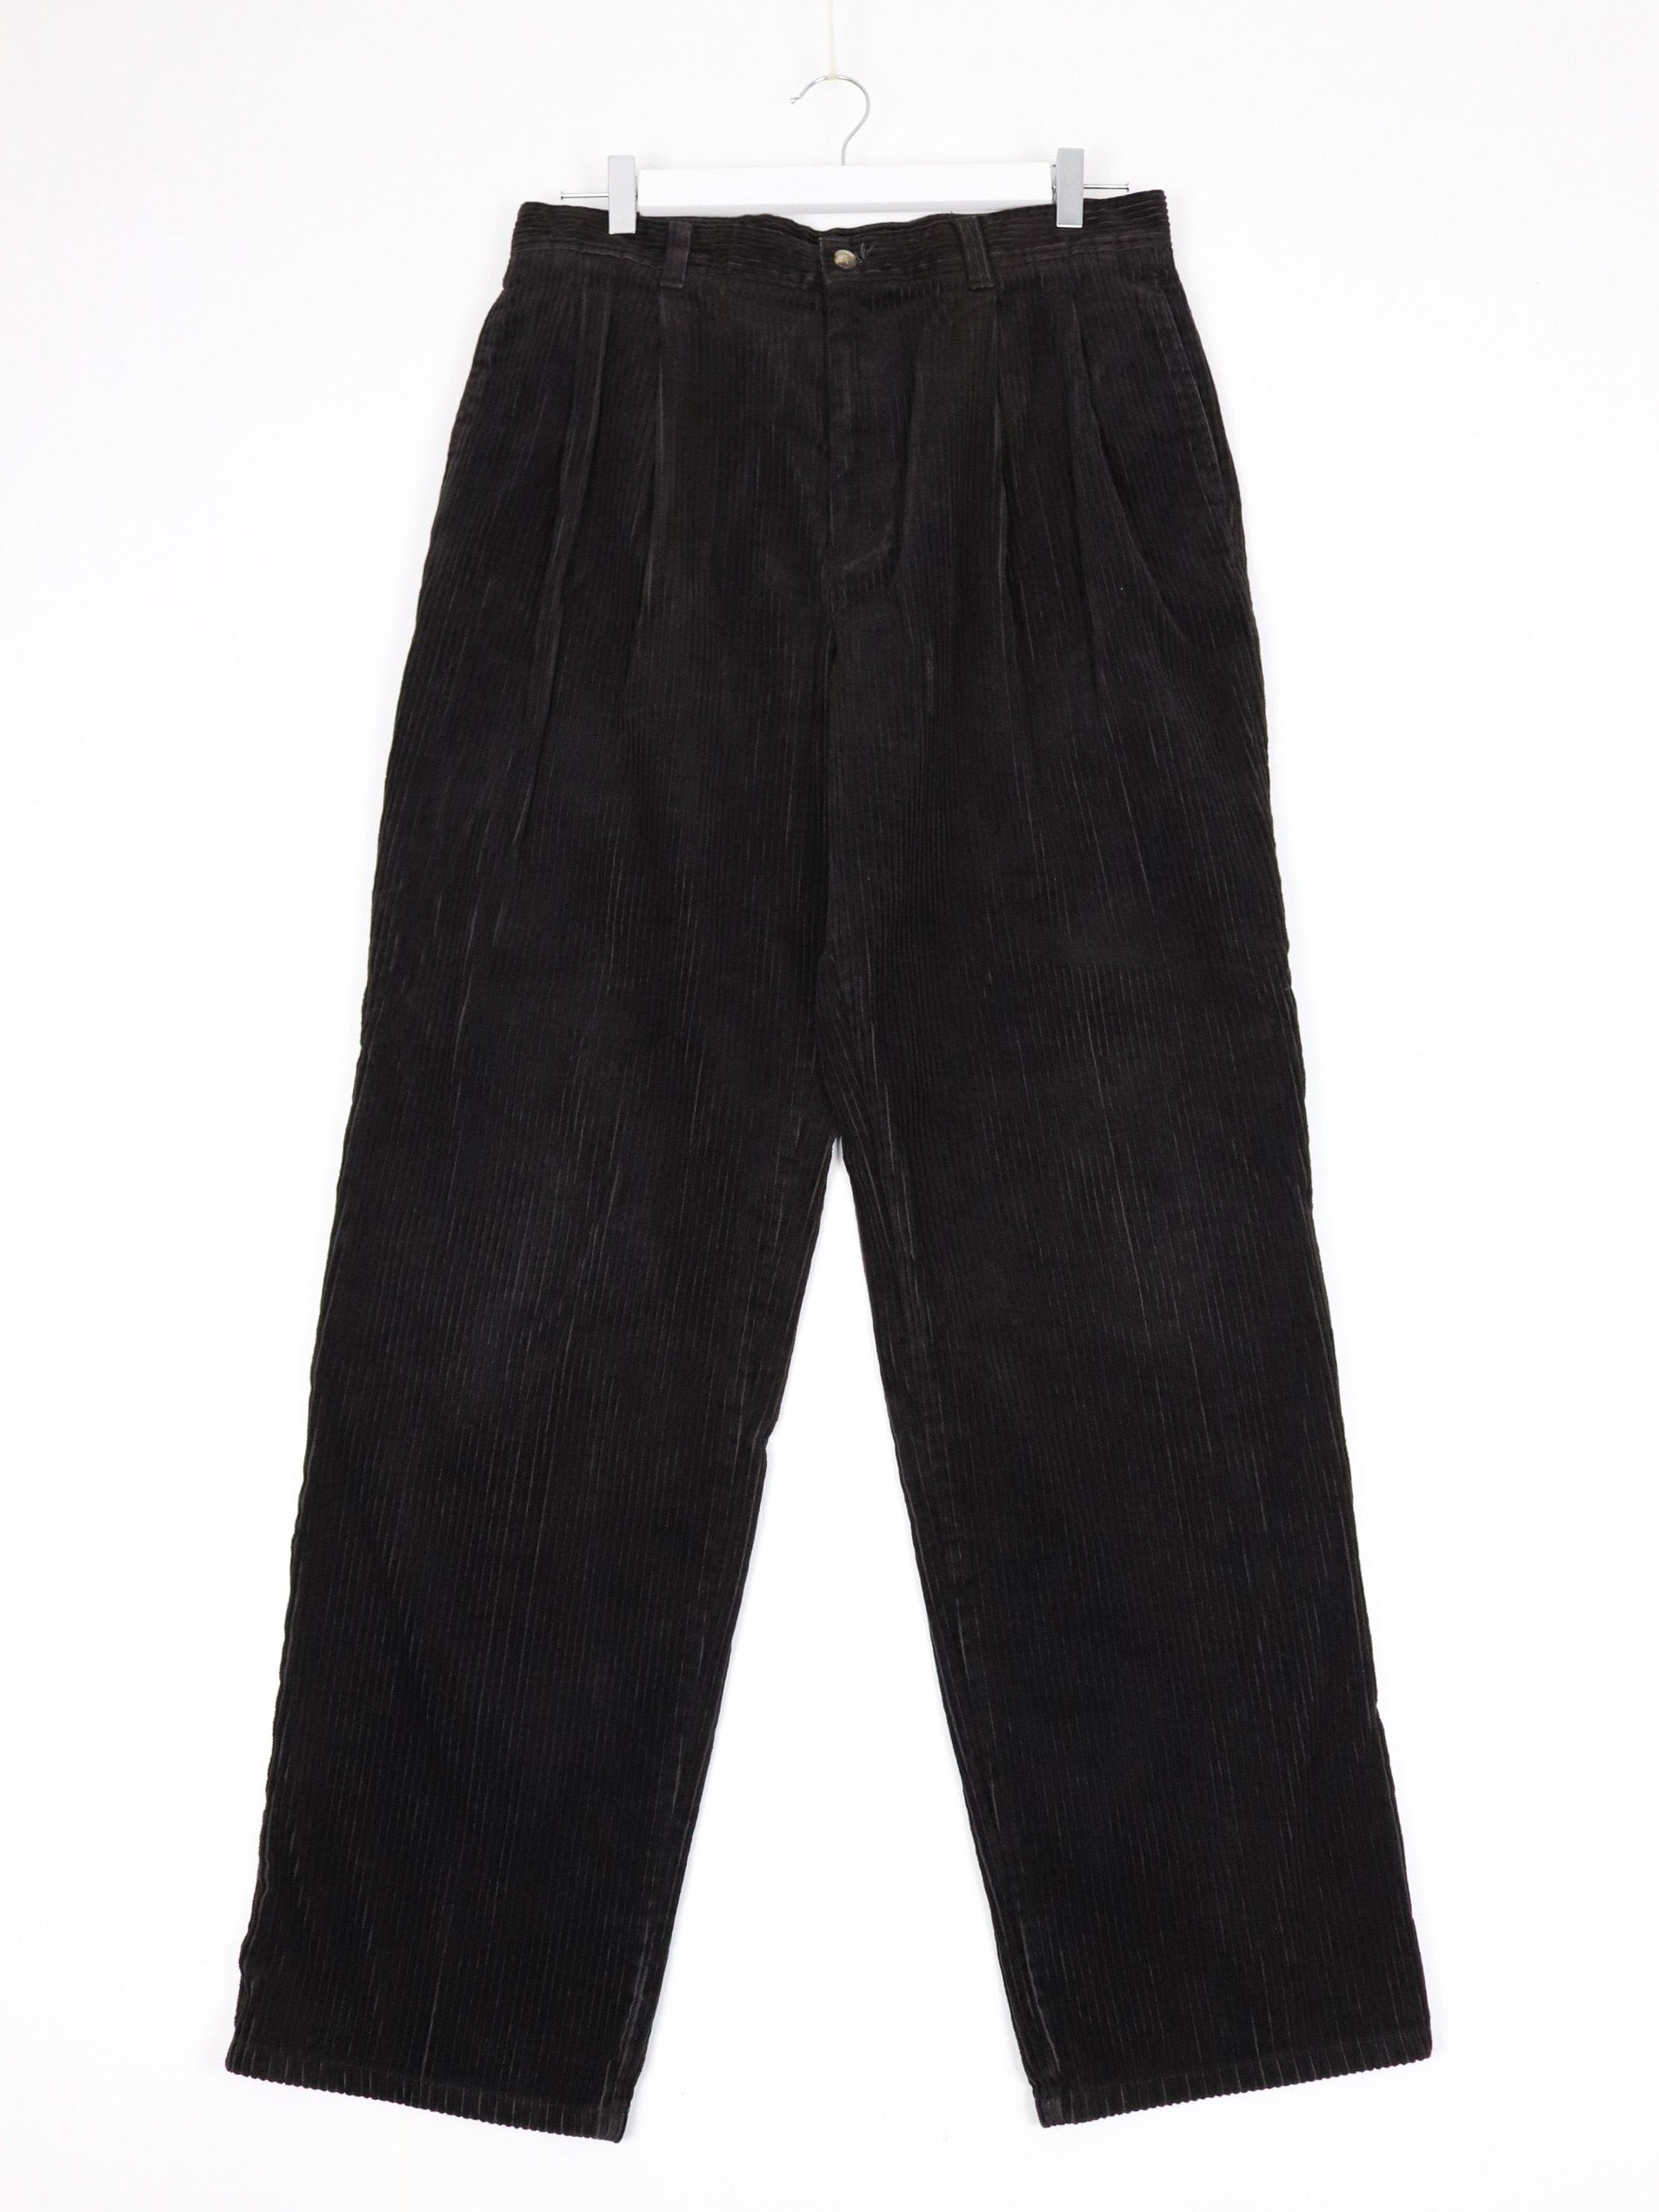 ZOKI Vintage Corduroy Women Pants Fashion Belt Fall Elastic High